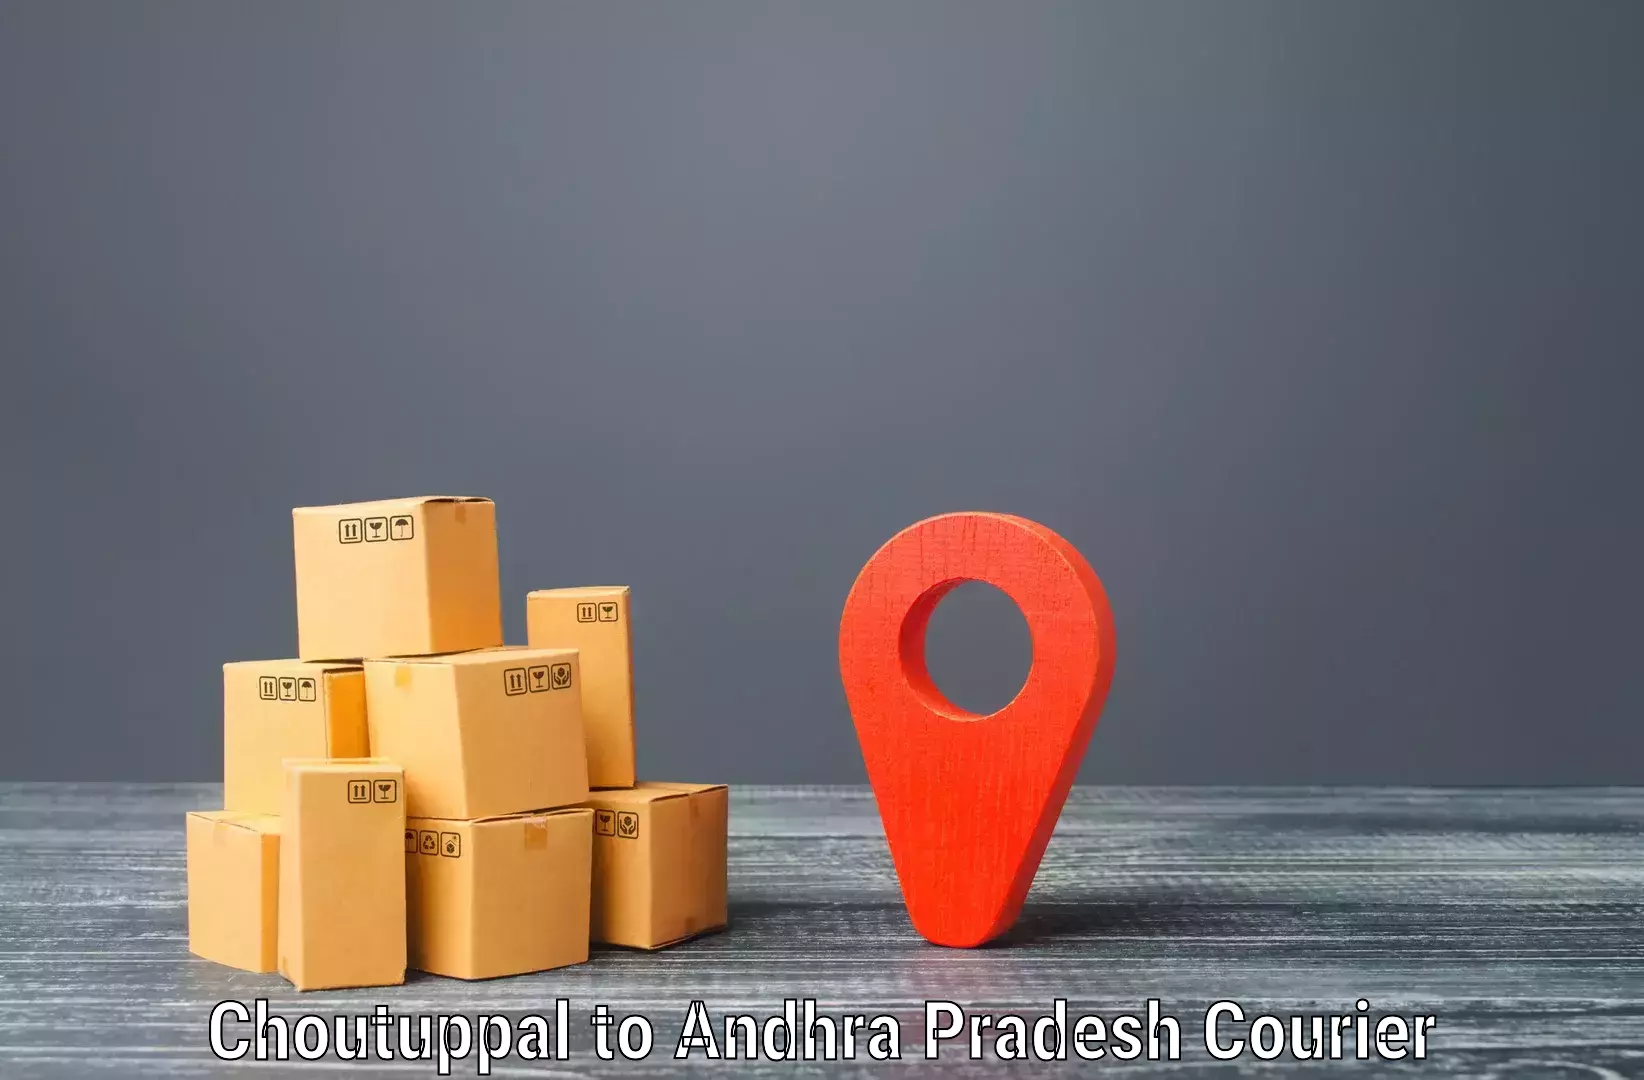 Advanced delivery network Choutuppal to Tirupati